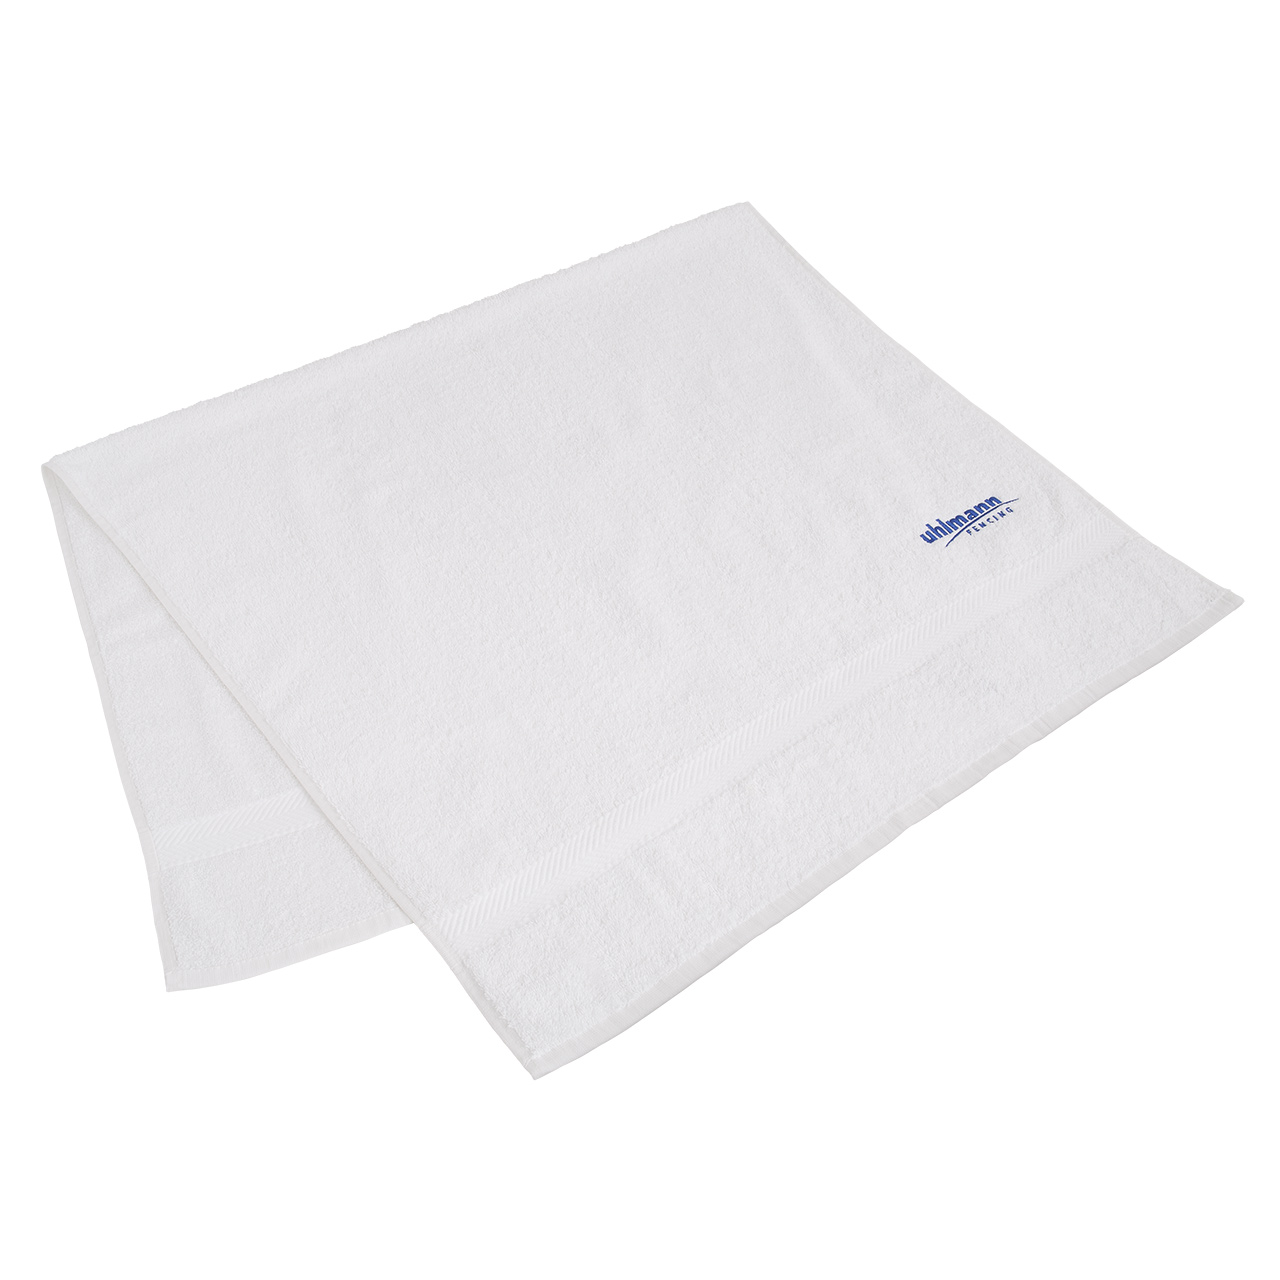 towel big, white with stitched Uhlmann-logo